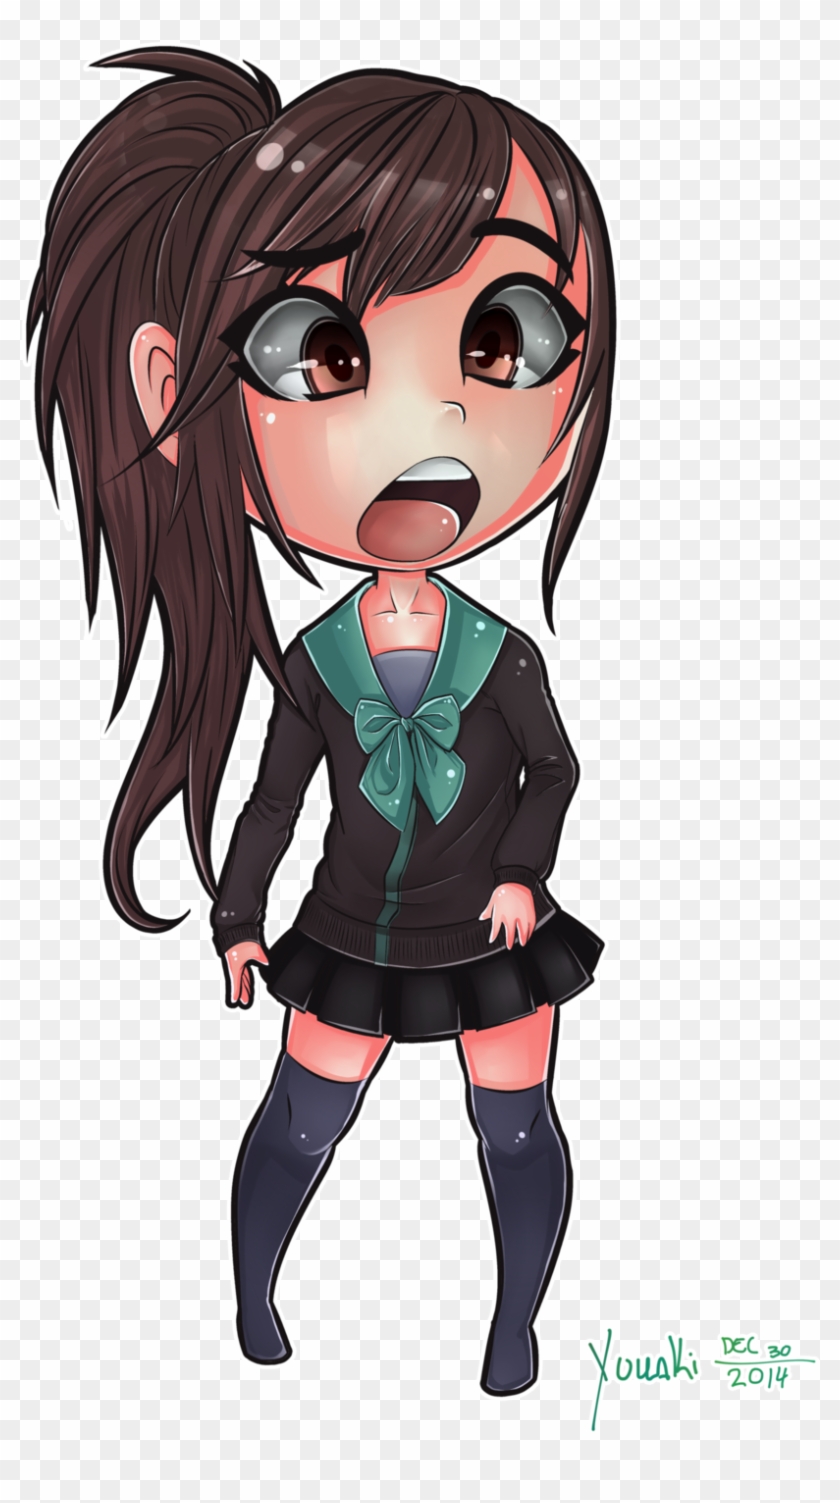 Chibi Schoolgirl - Anime Chibi School Girl #787760